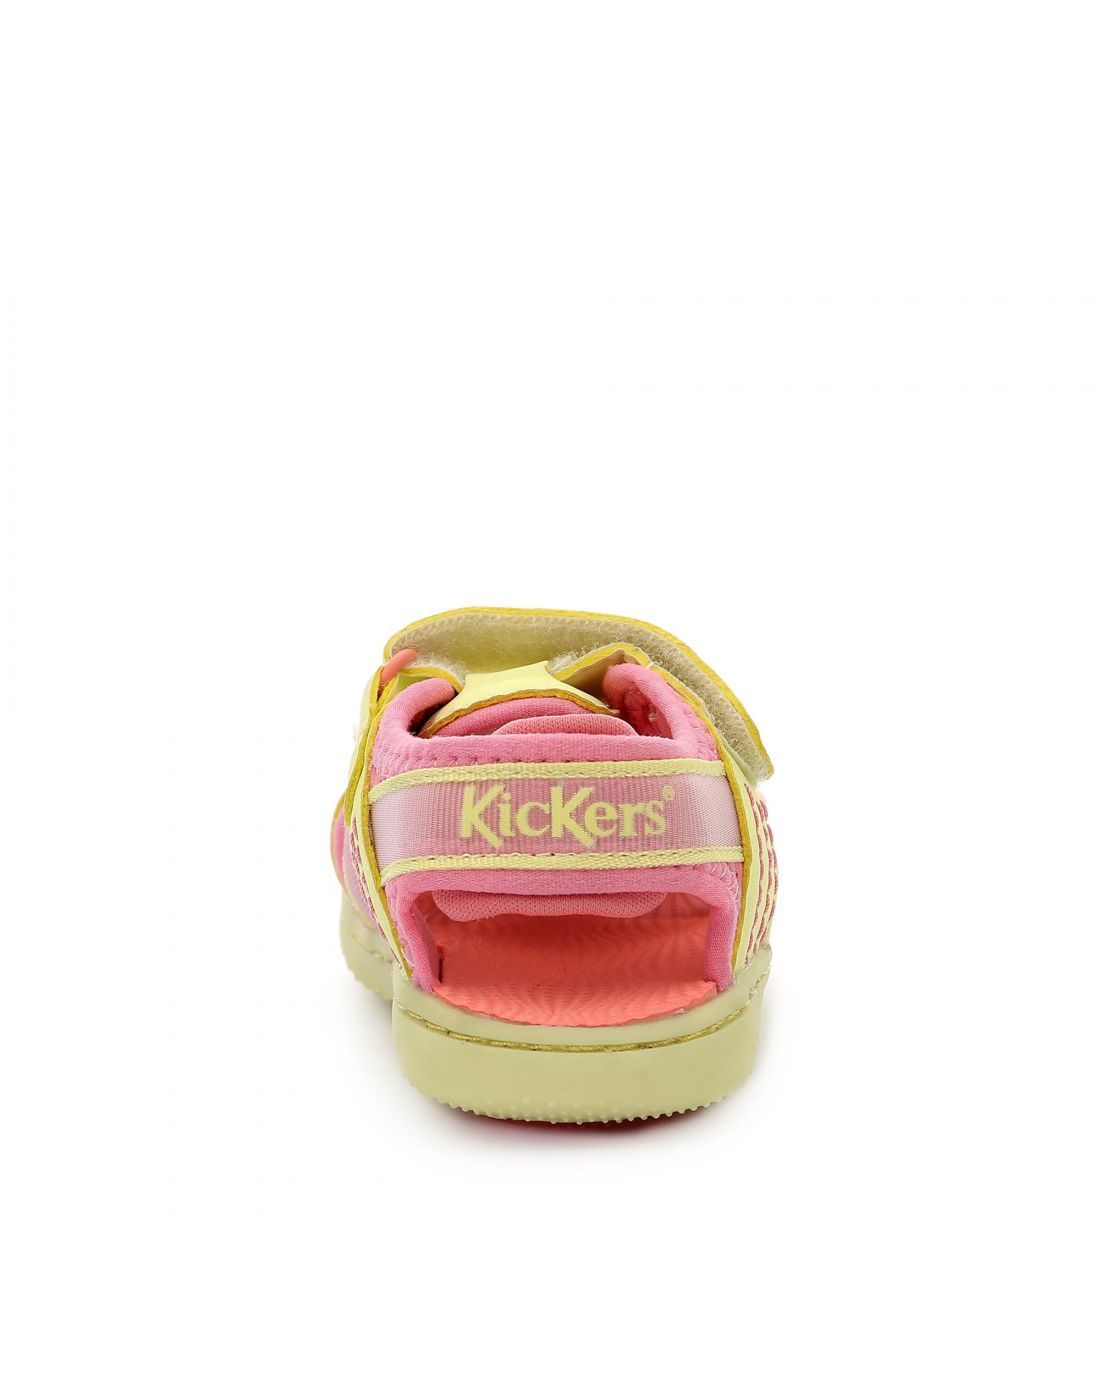 Kickers Girls Sandals